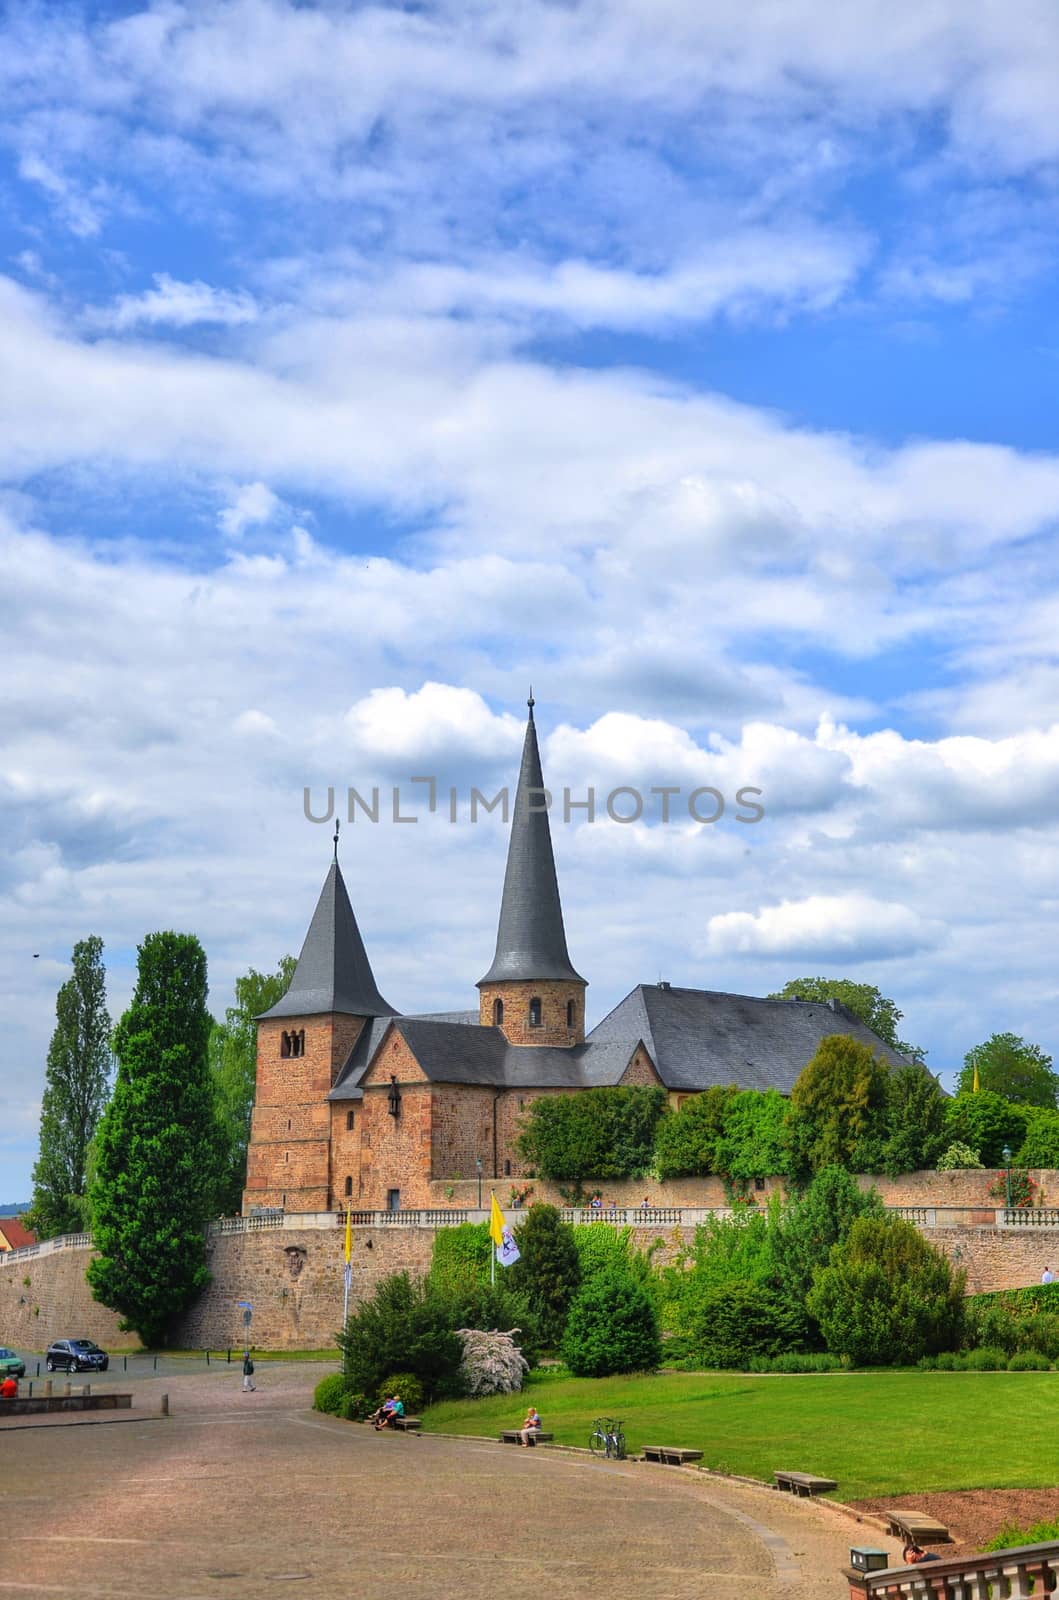 Fuldaer Dom Cathedral in Fulda, Hessen, Germany by Eagle2308